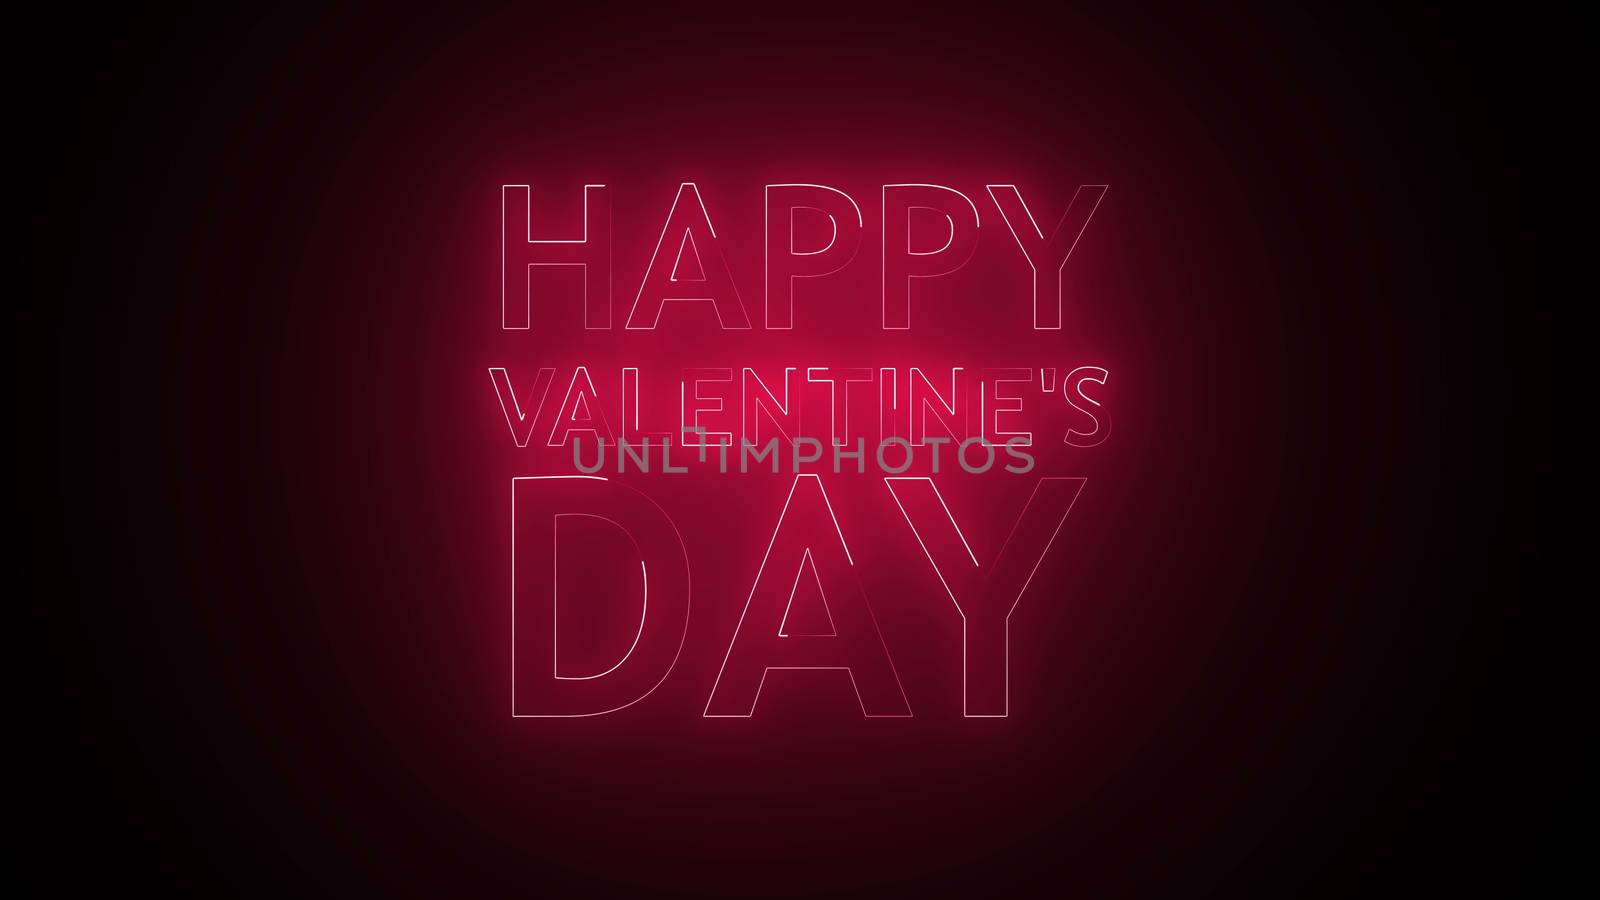 Happy Valentine's Day Text in neon. 3d rendering